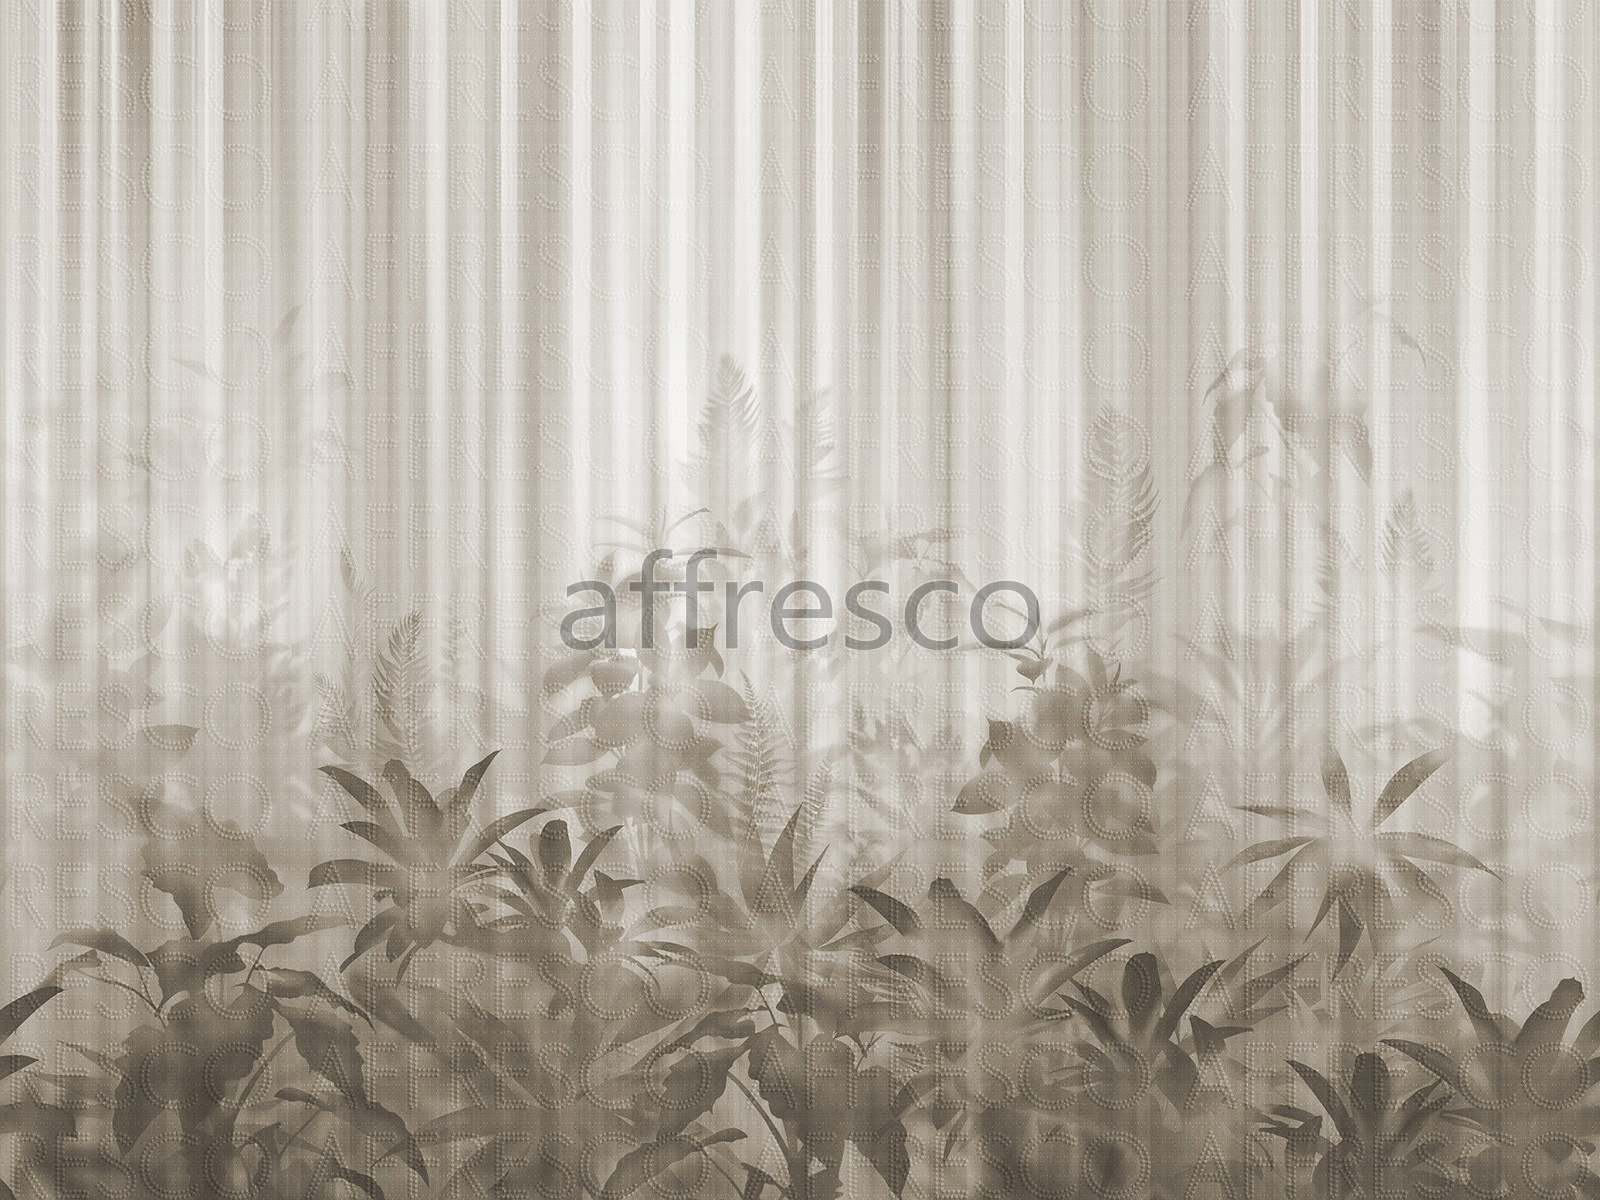 RE907-COL2 | Fine Art | Affresco Factory